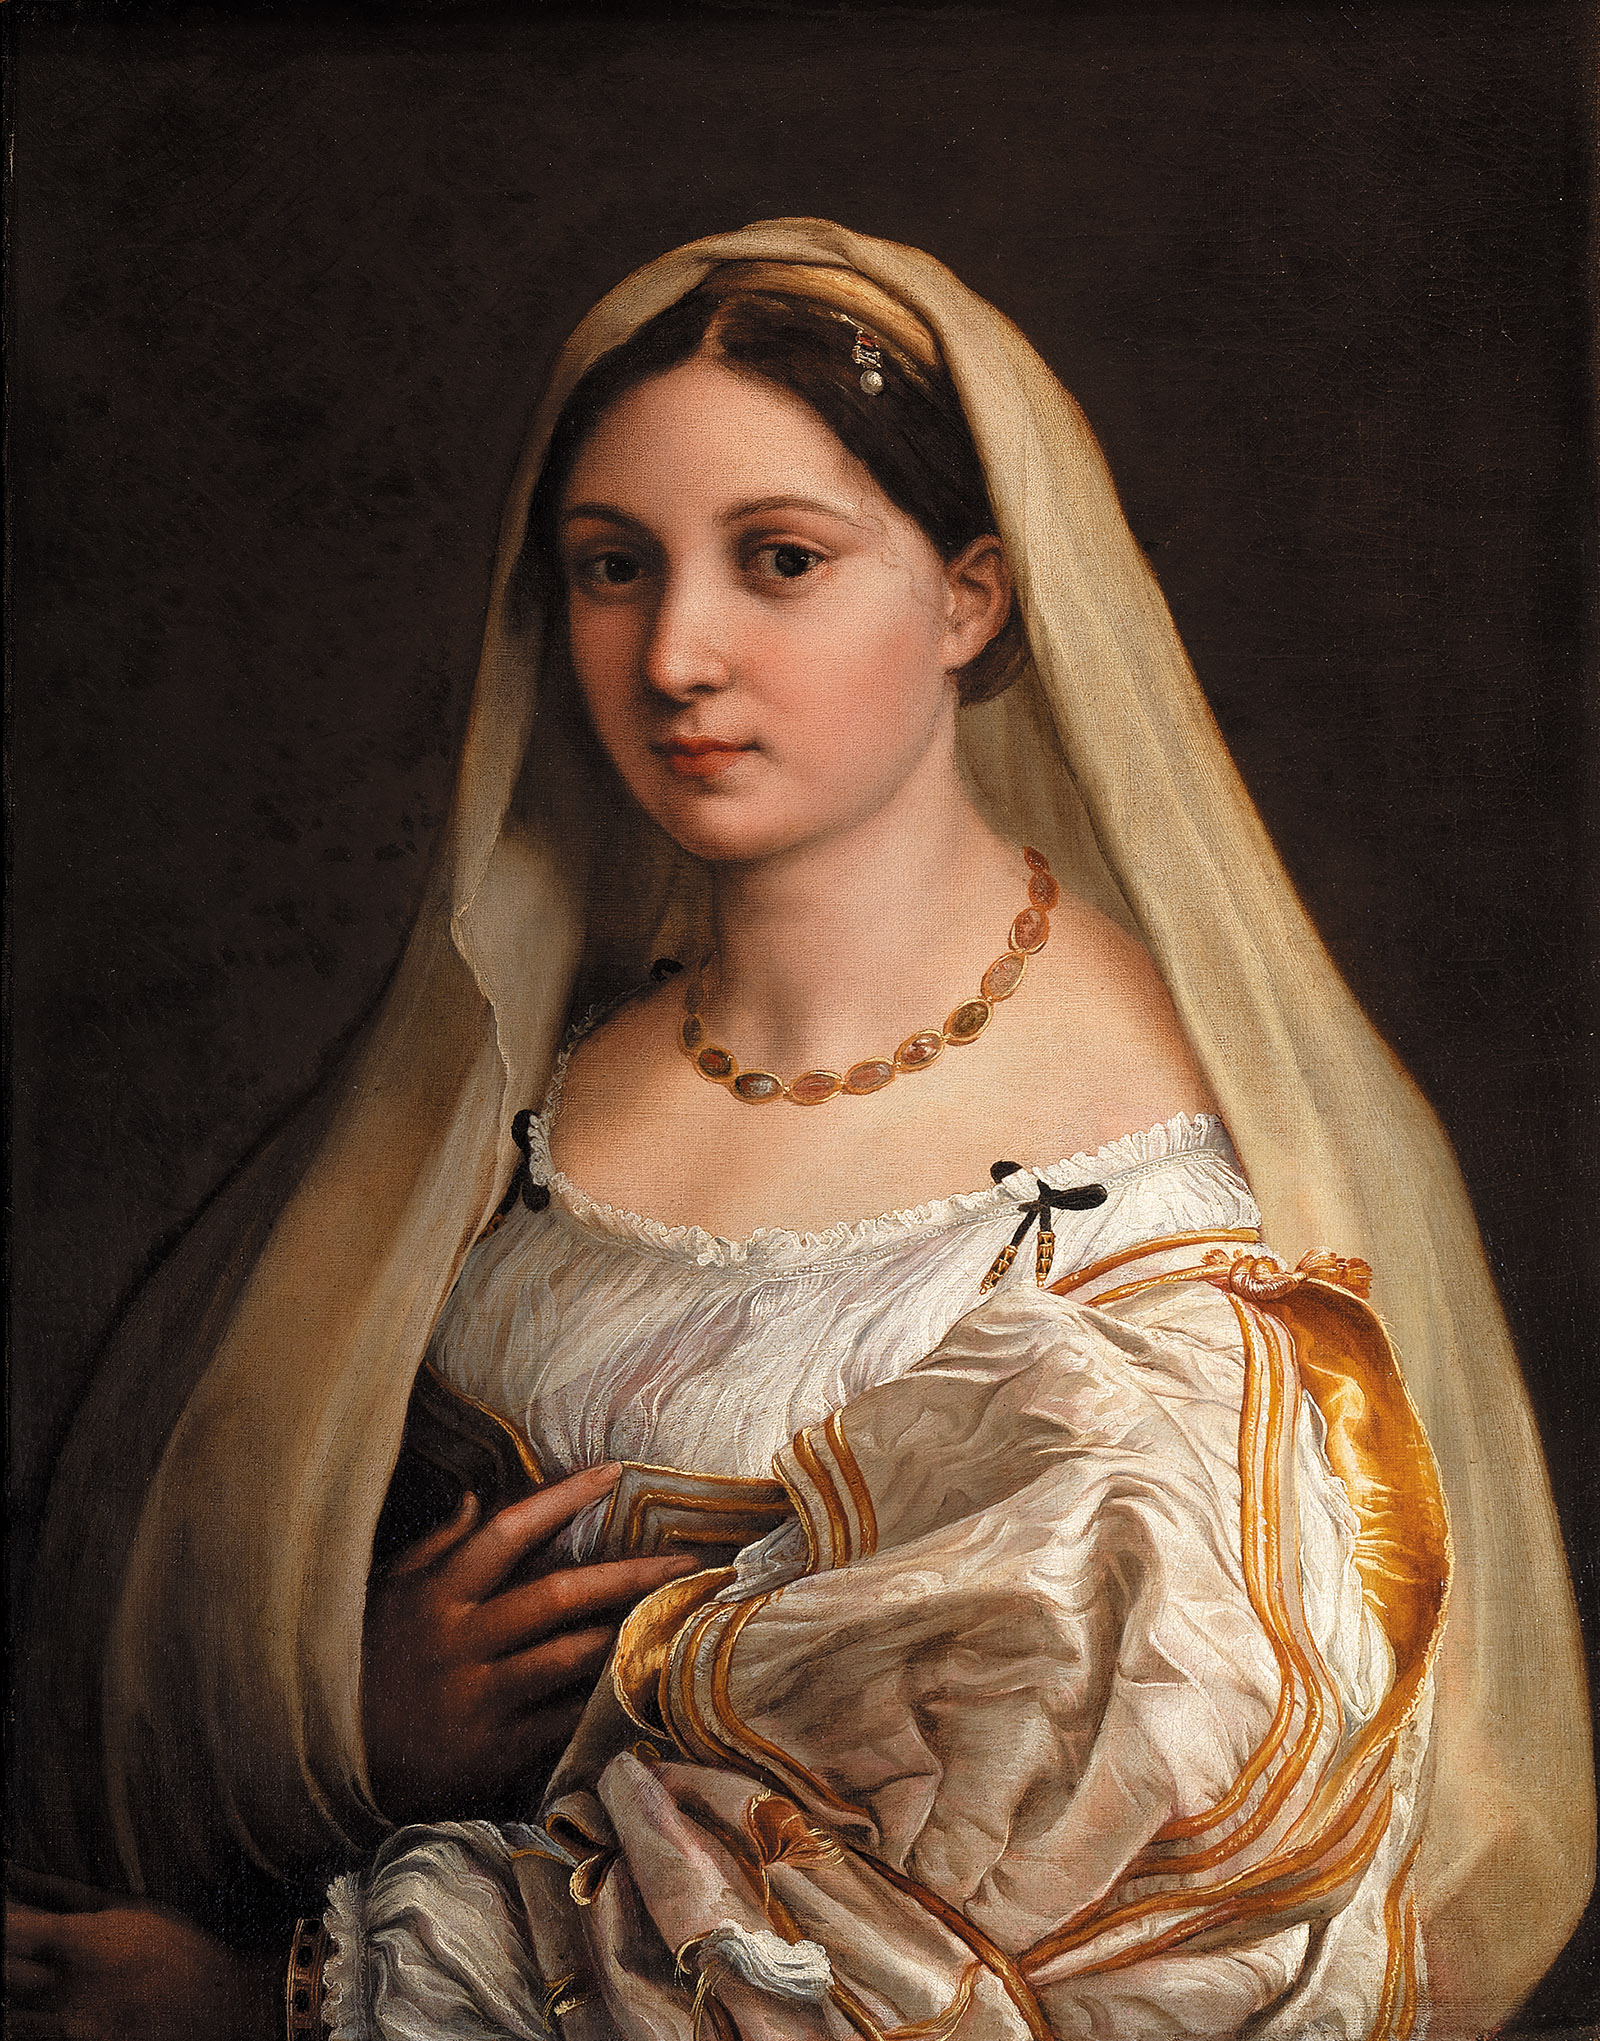 La Velata; painting by Raphael